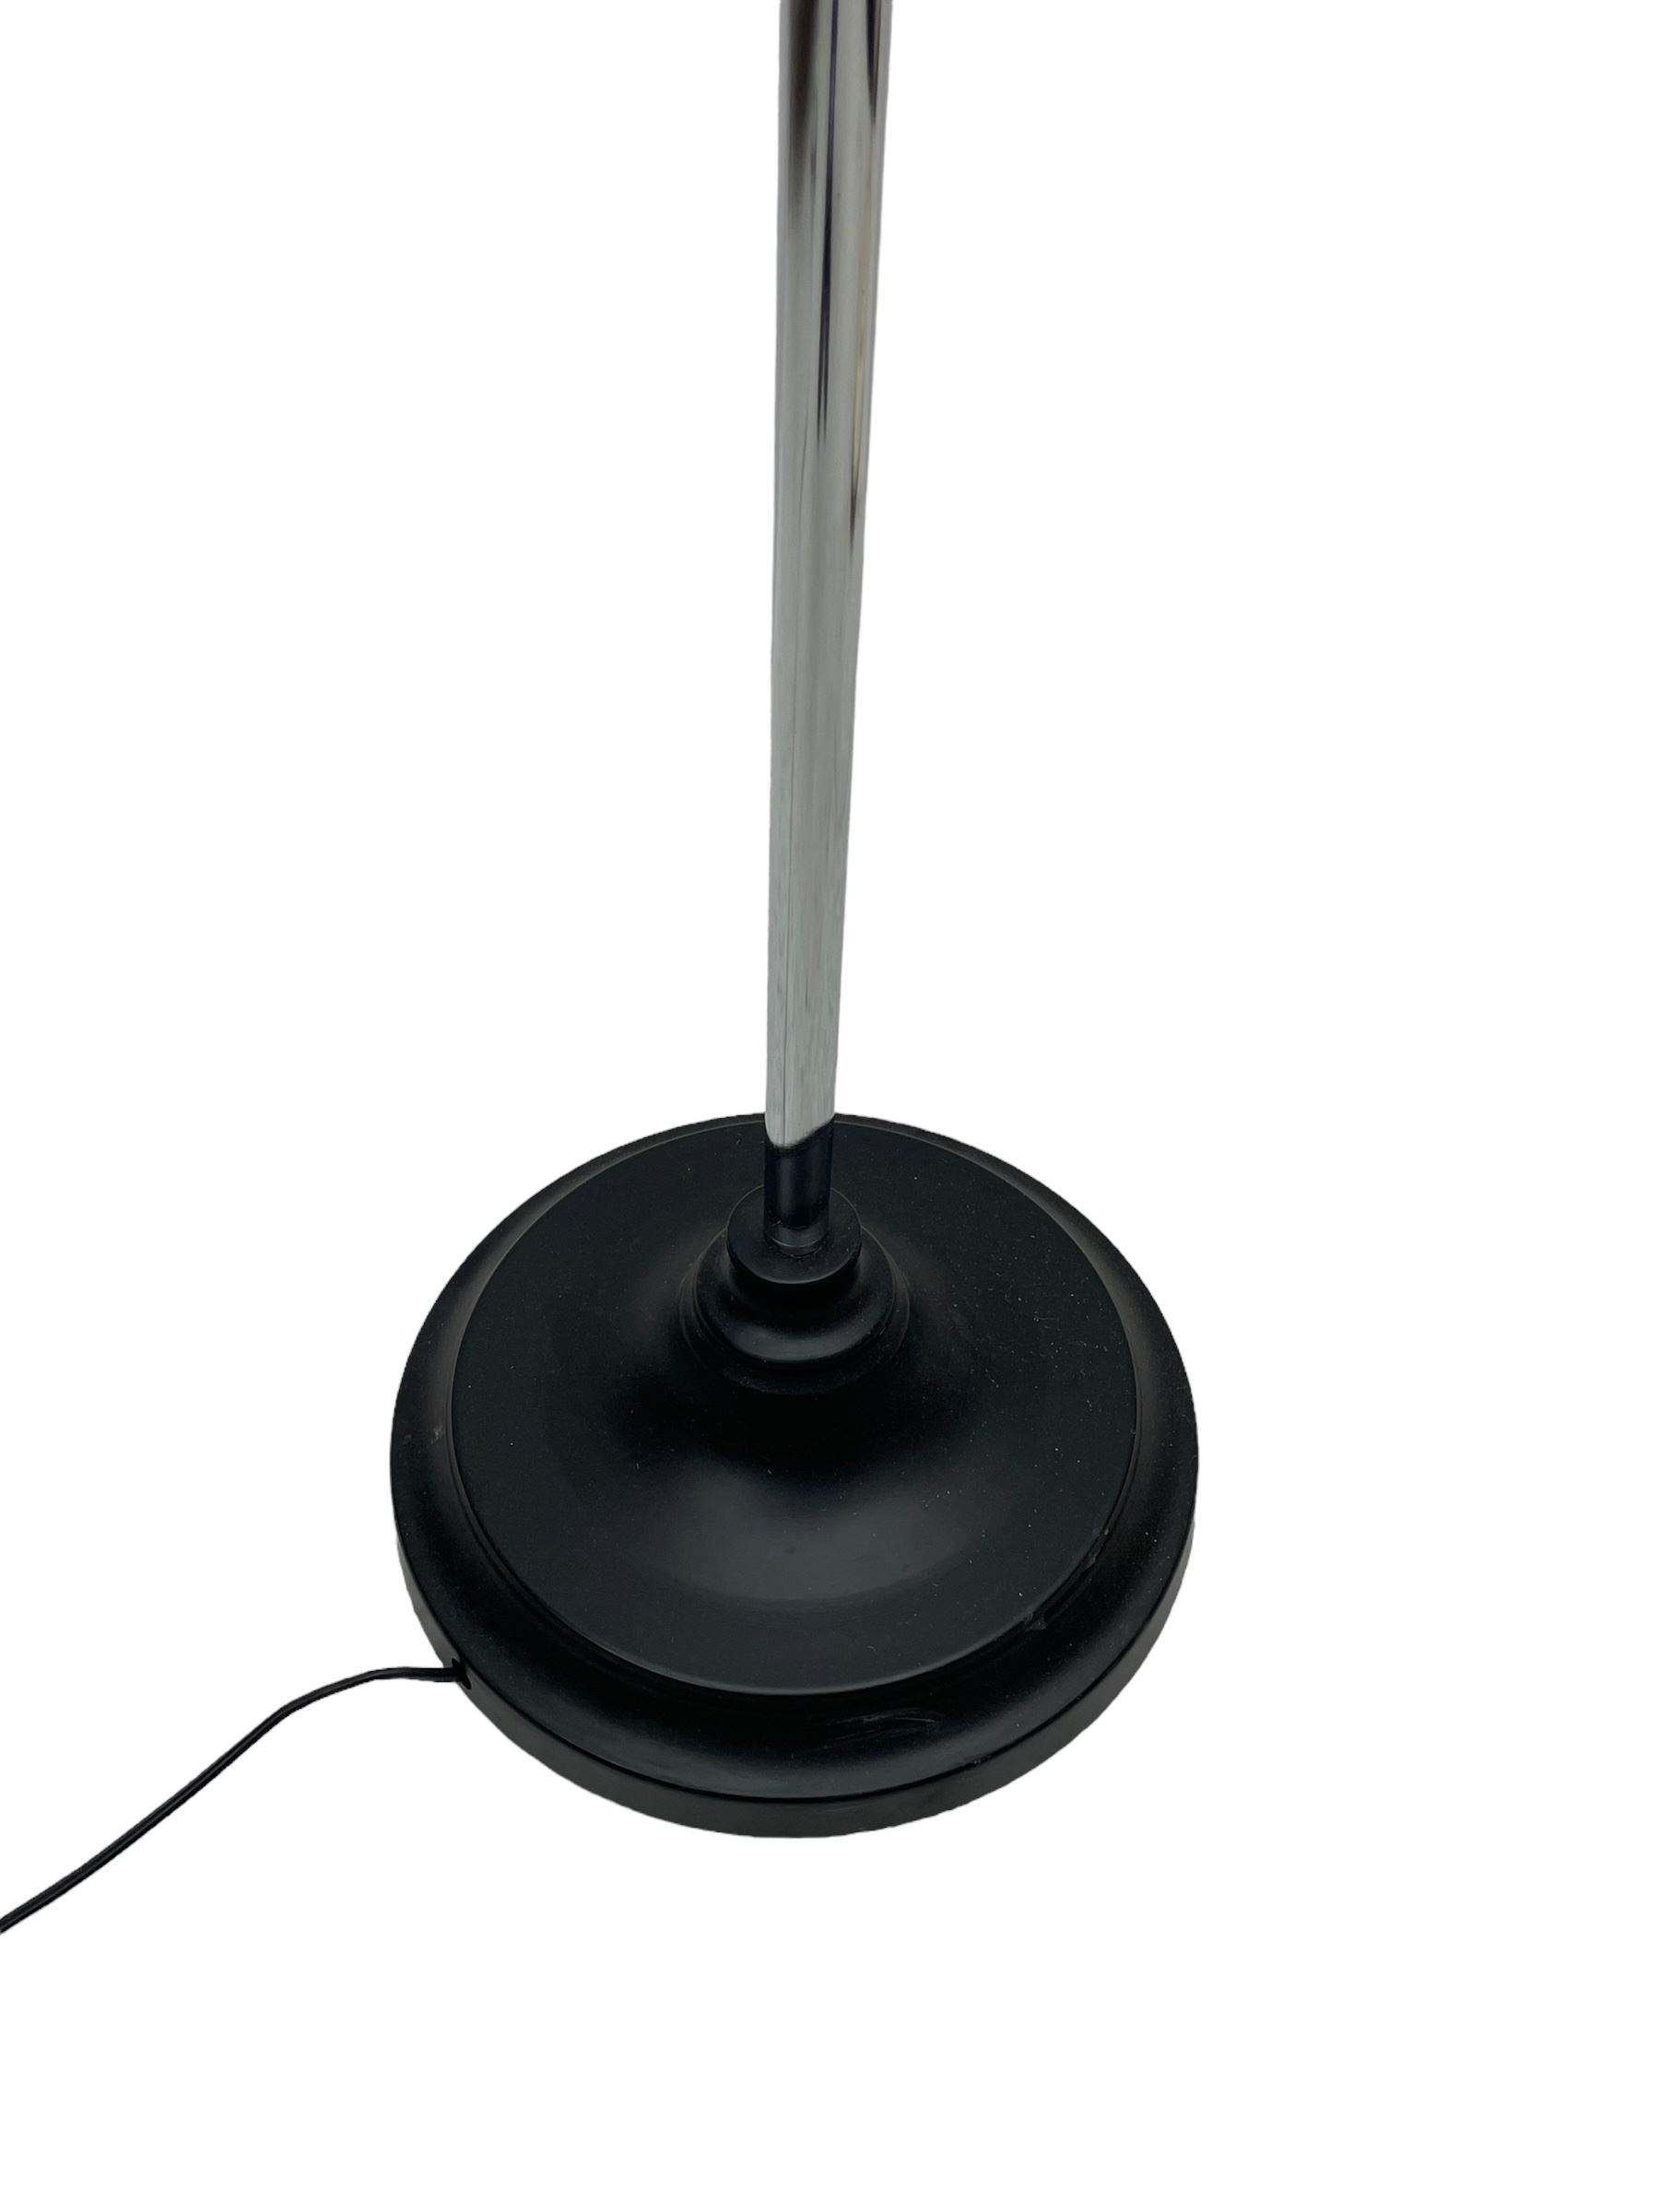 Modern adjustable reading lamp - Image 2 of 3